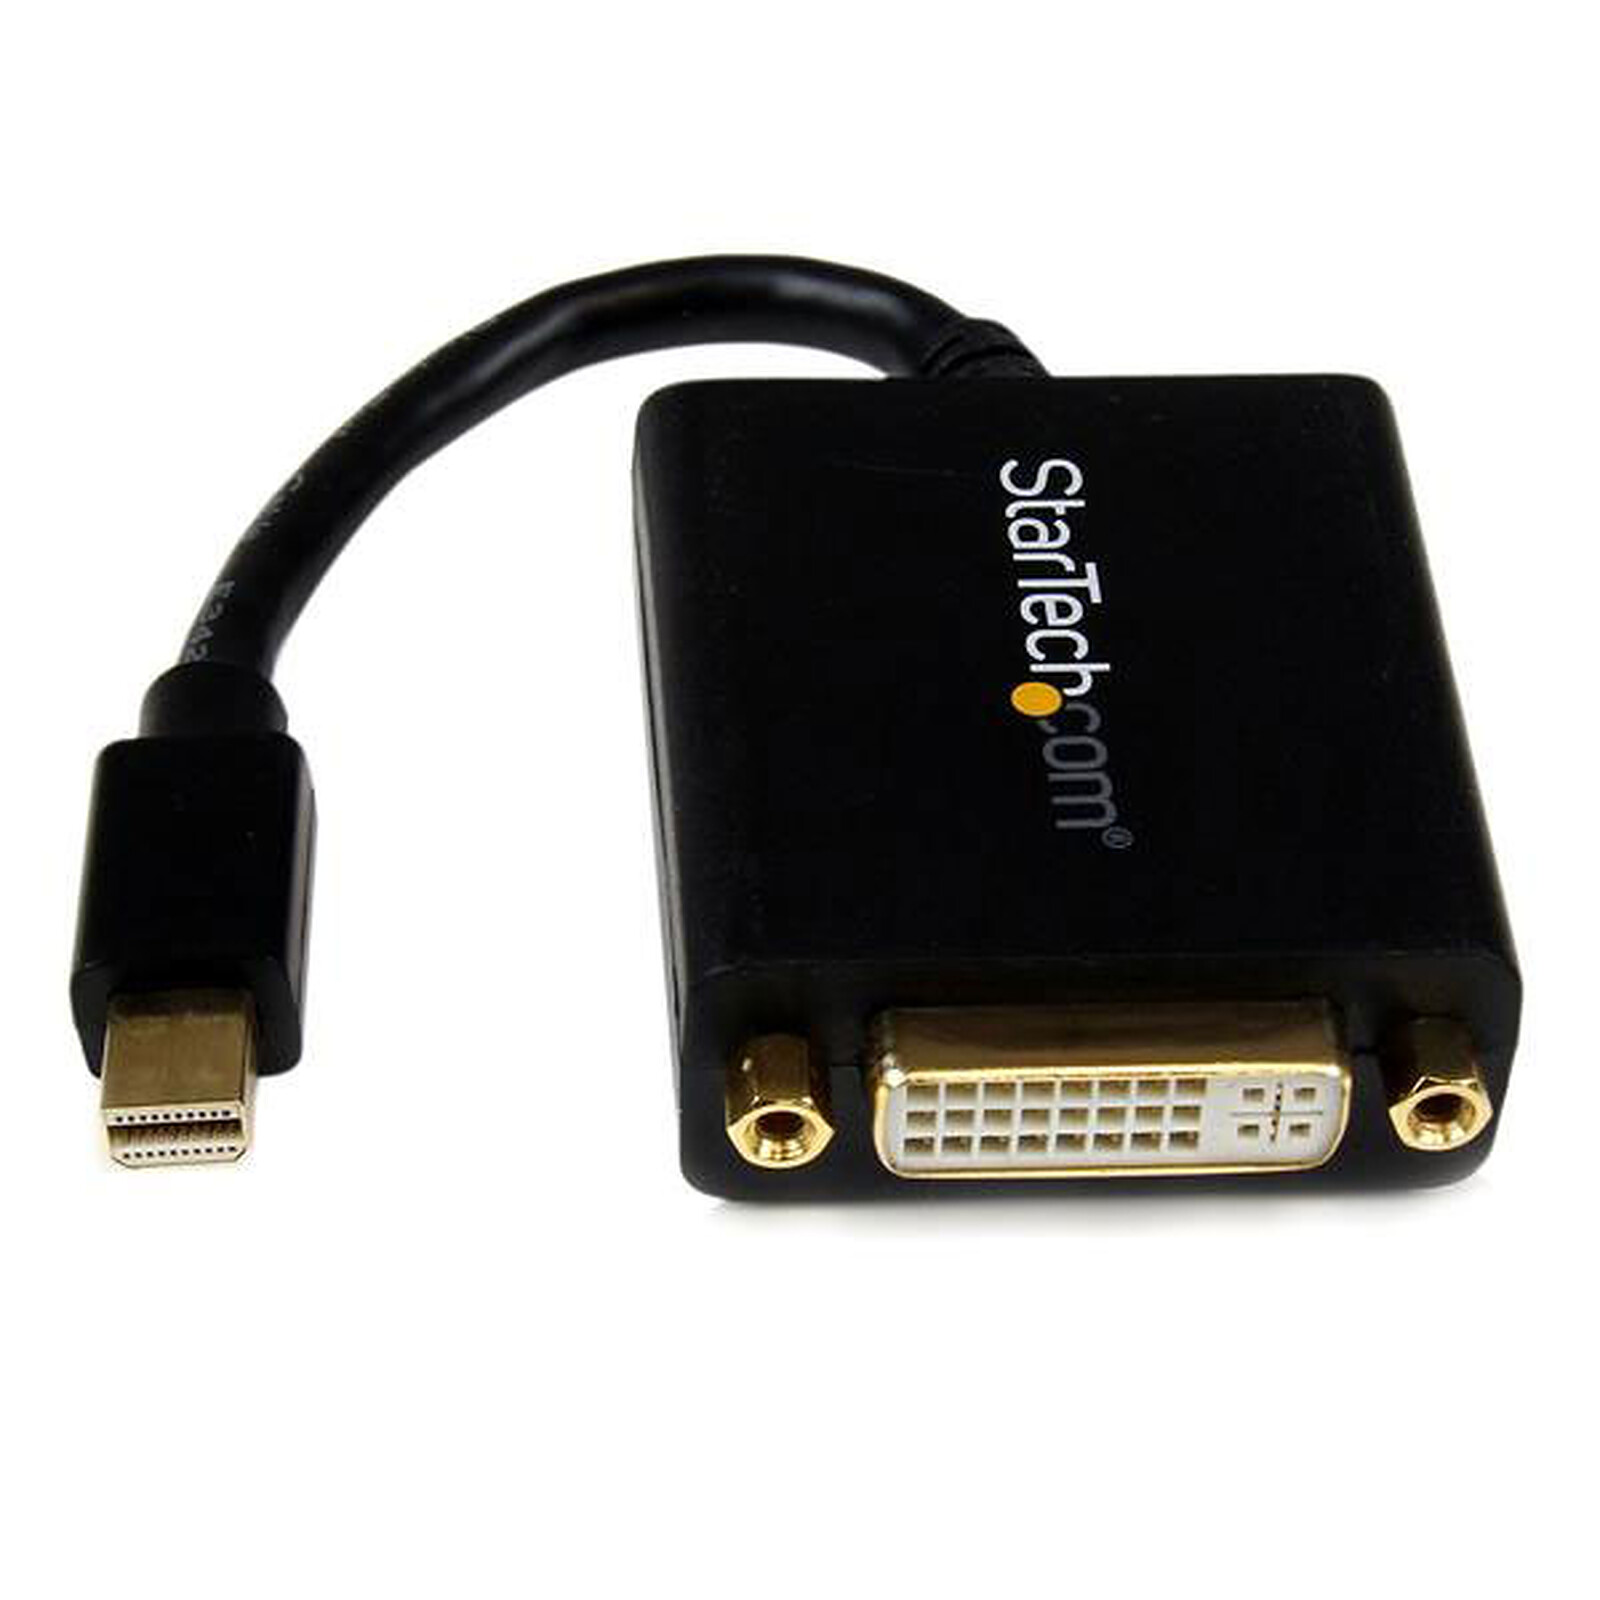 StarTech.com Adaptateur DisplayPort 1.2 vers HDMI 2.0 4K 60Hz - M/F -  Connecteur DP Verrouillable - DisplayPort - Garantie 3 ans LDLC